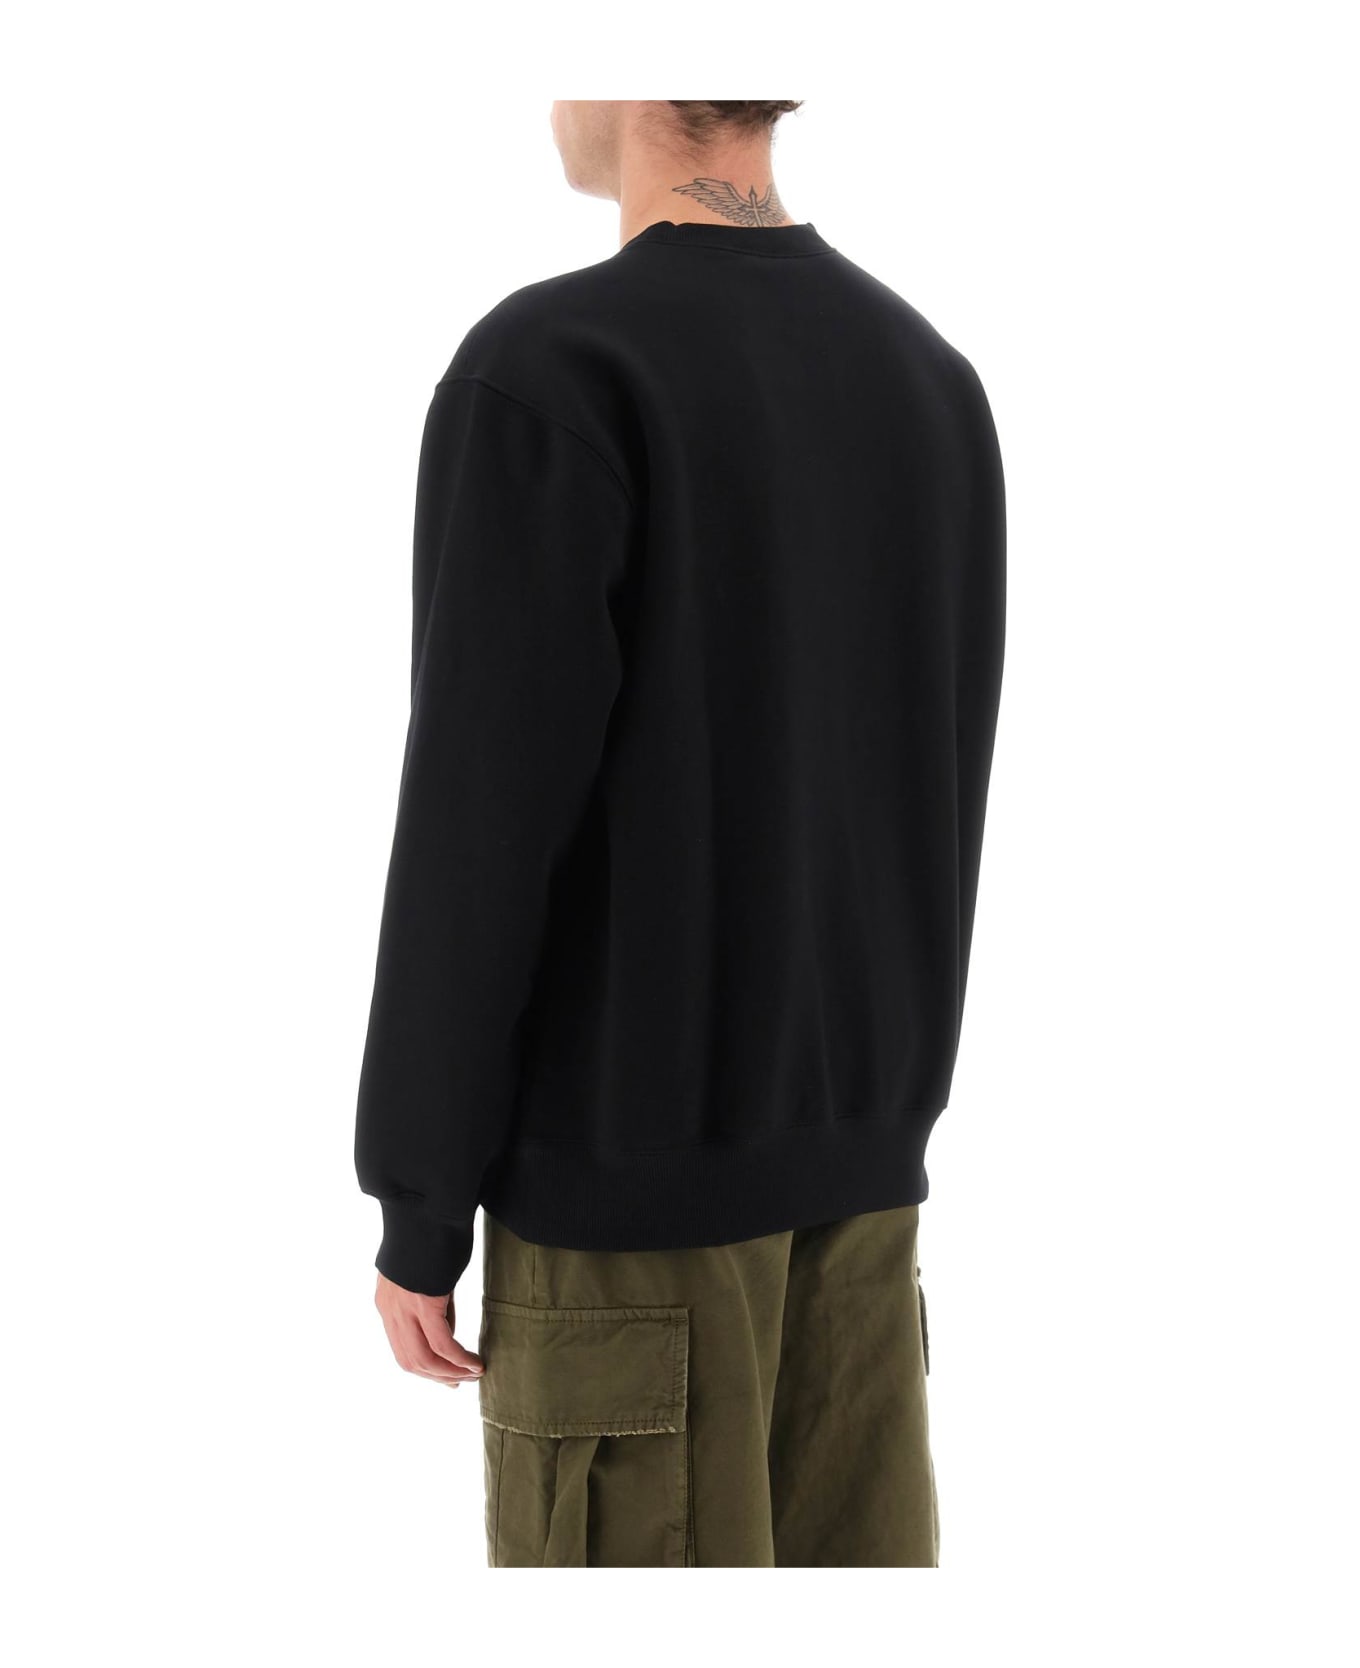 Carhartt Sweatshirt - Black